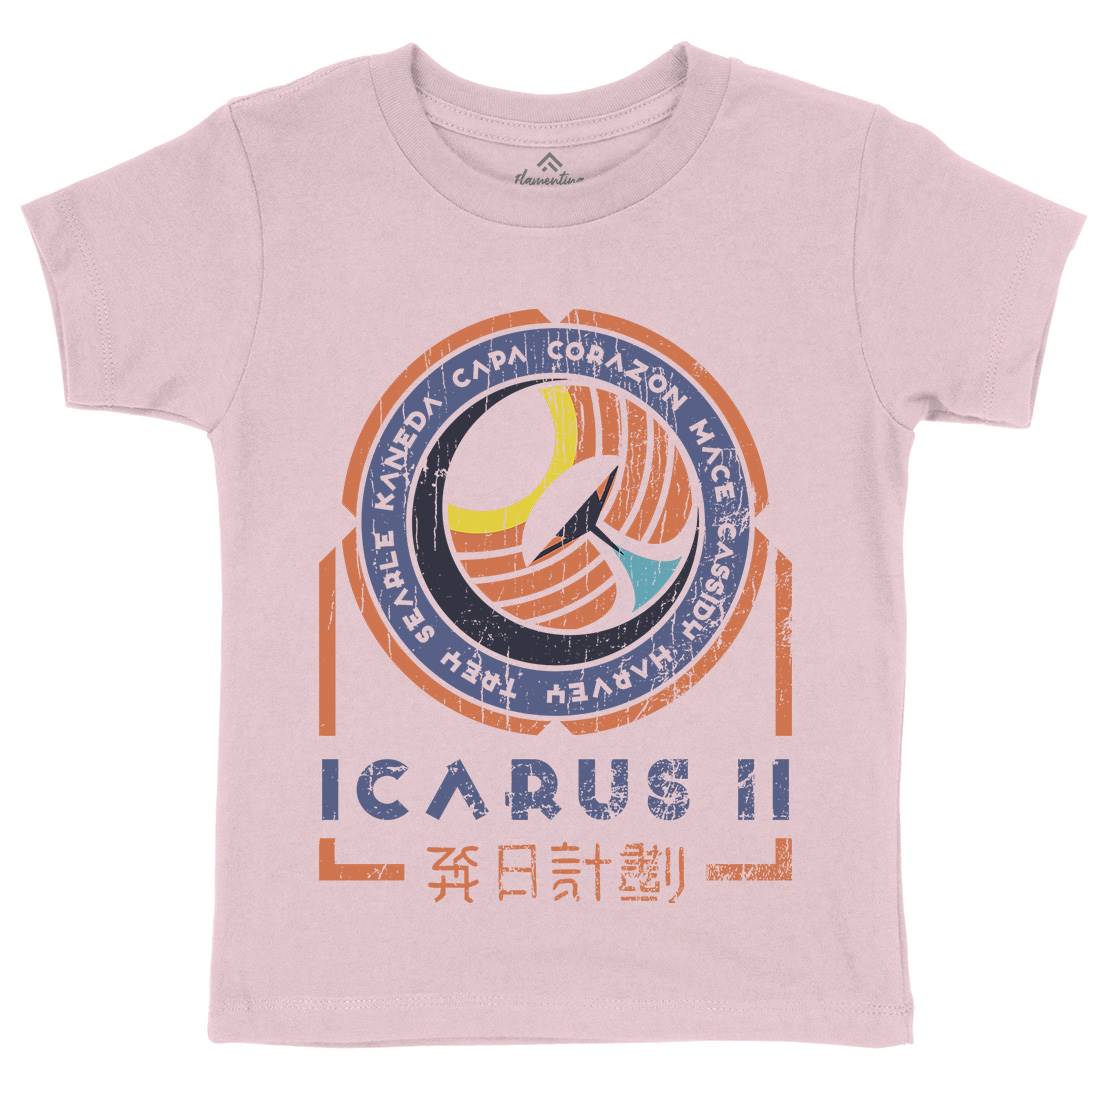 Icarus Ii Kids Crew Neck T-Shirt Space D233